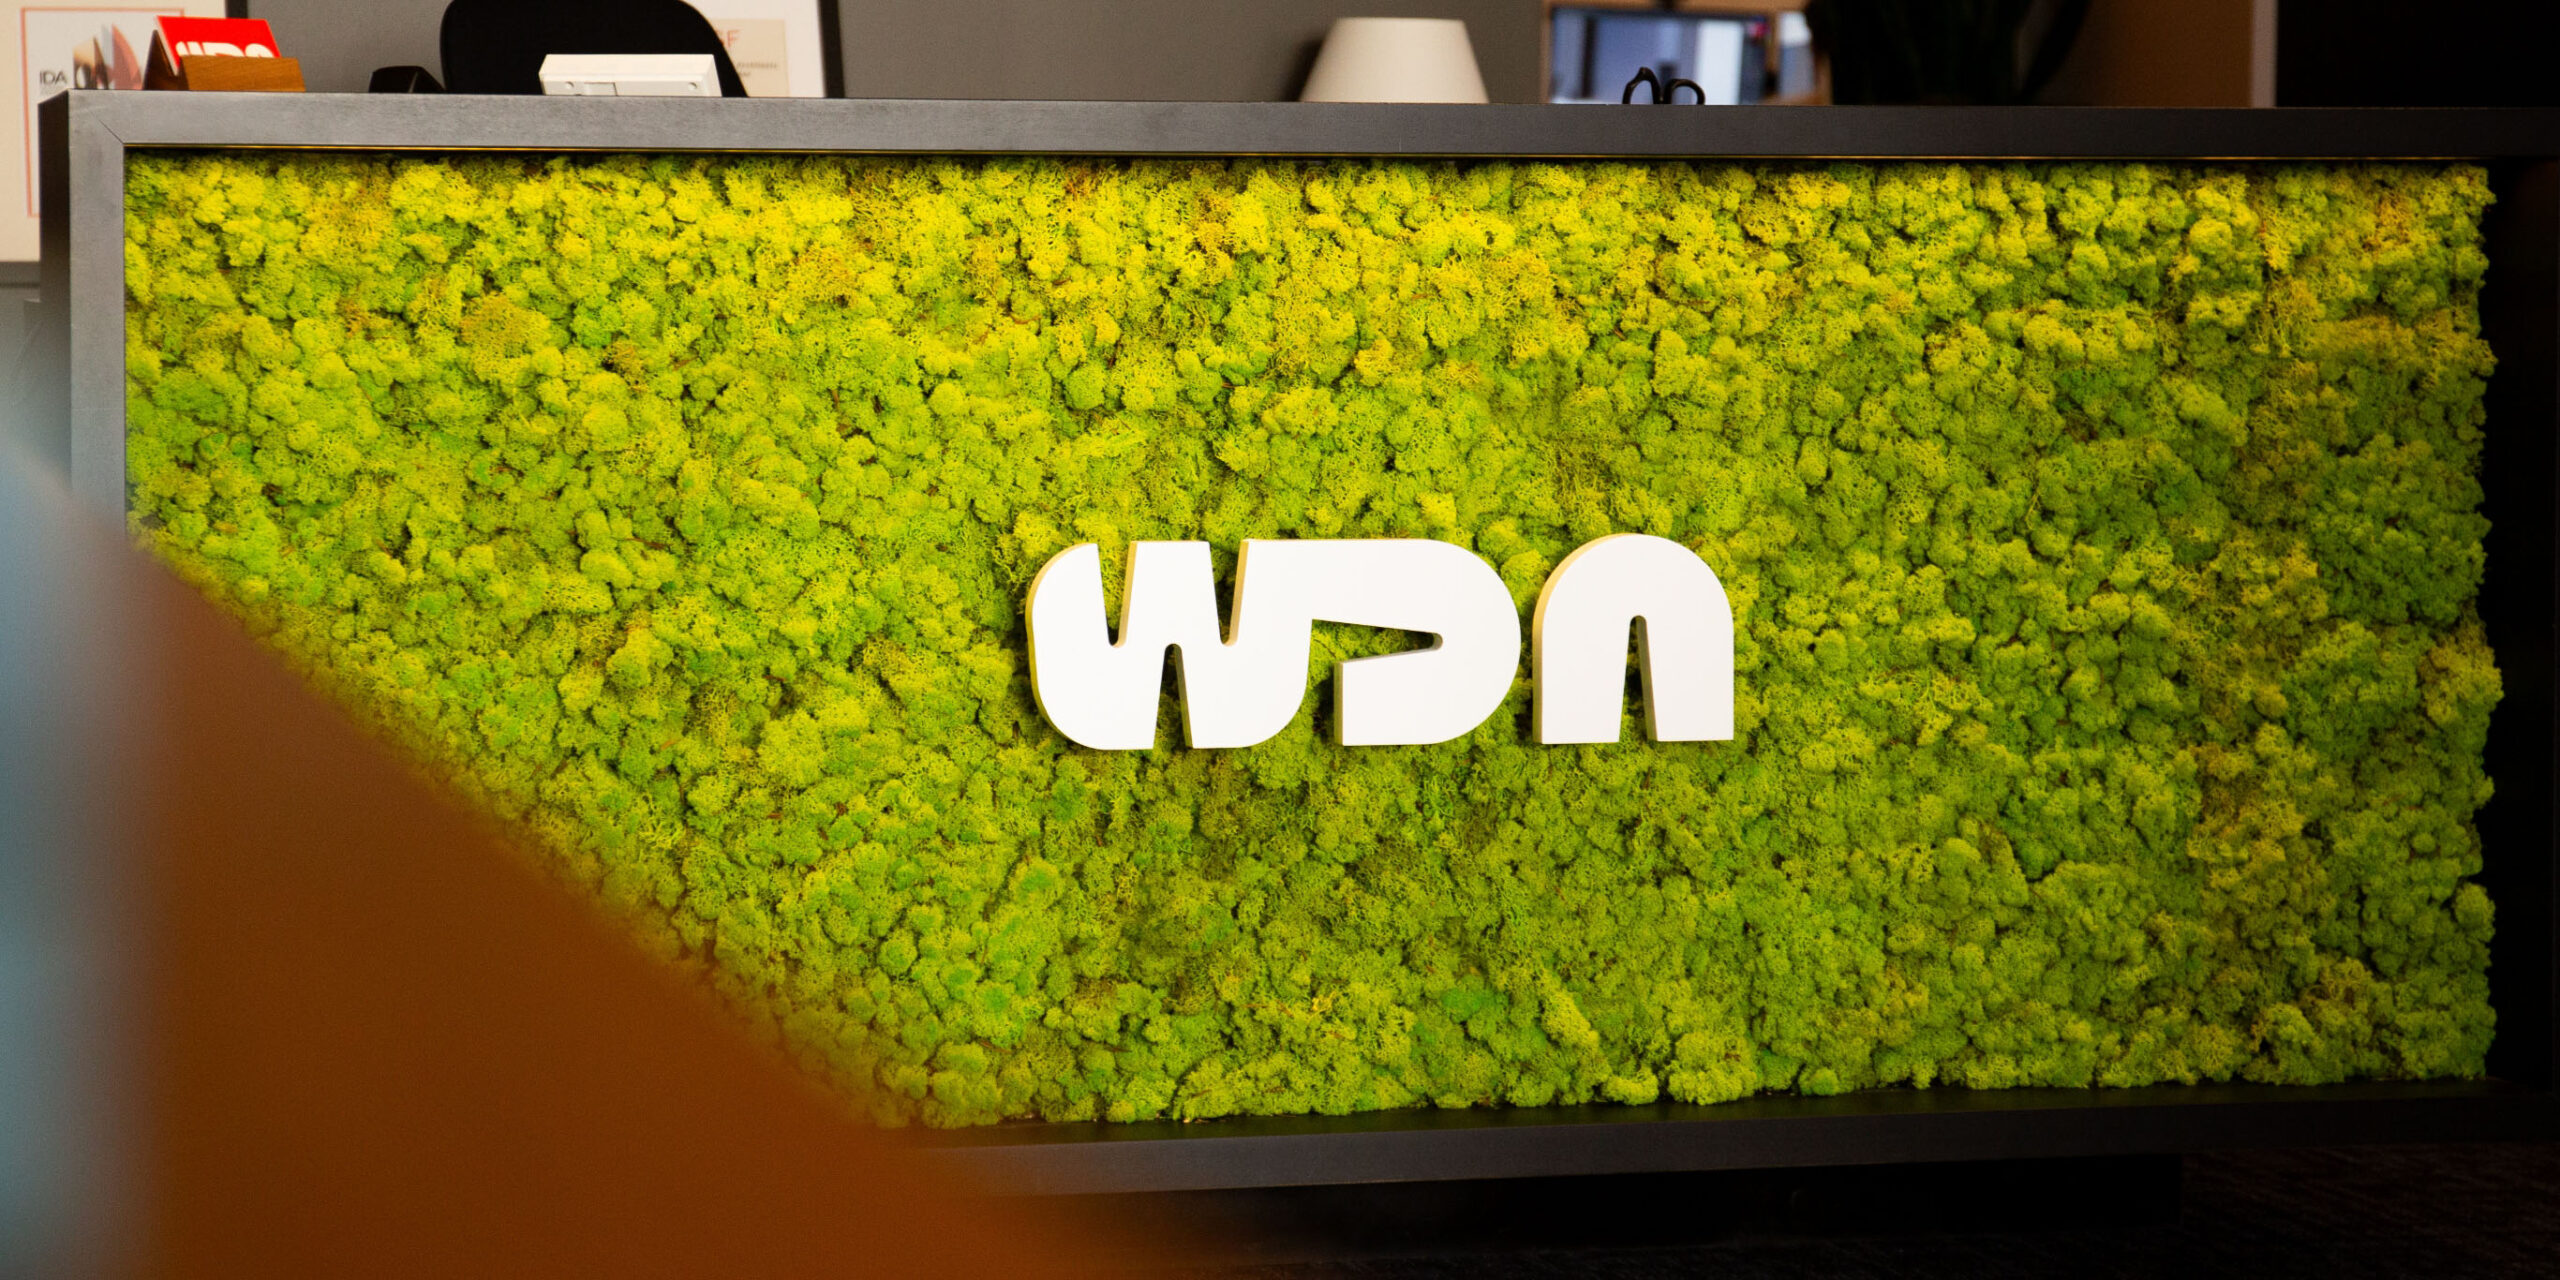 lobby front desk logo signage surrounded by foliage